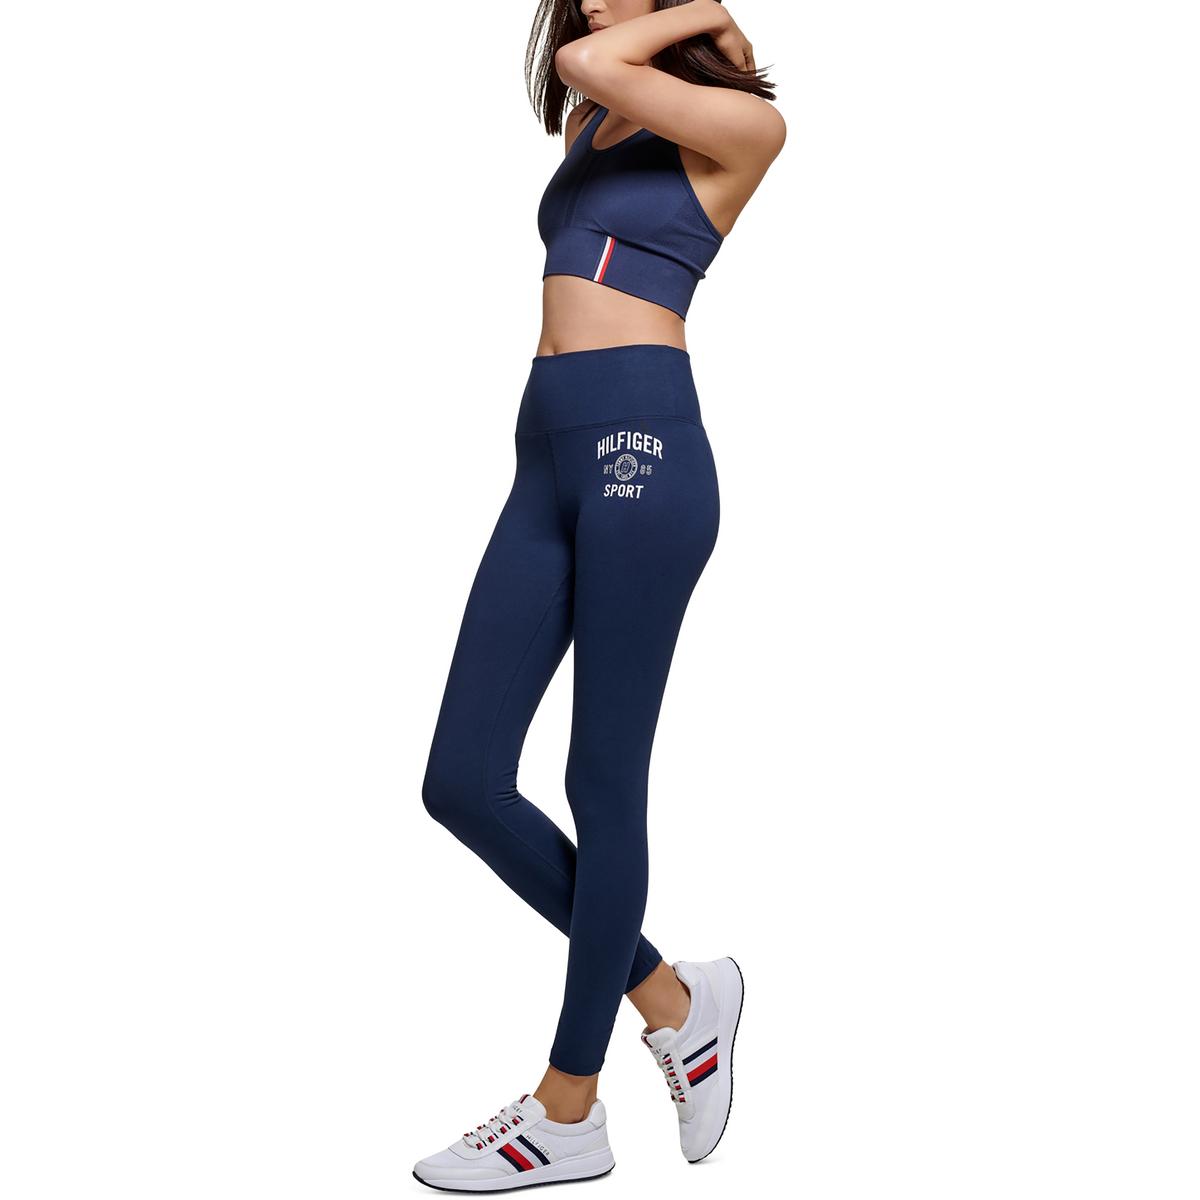 Tommy Hilfiger Sport Womens Gym Fitness Training Athletic Leggings